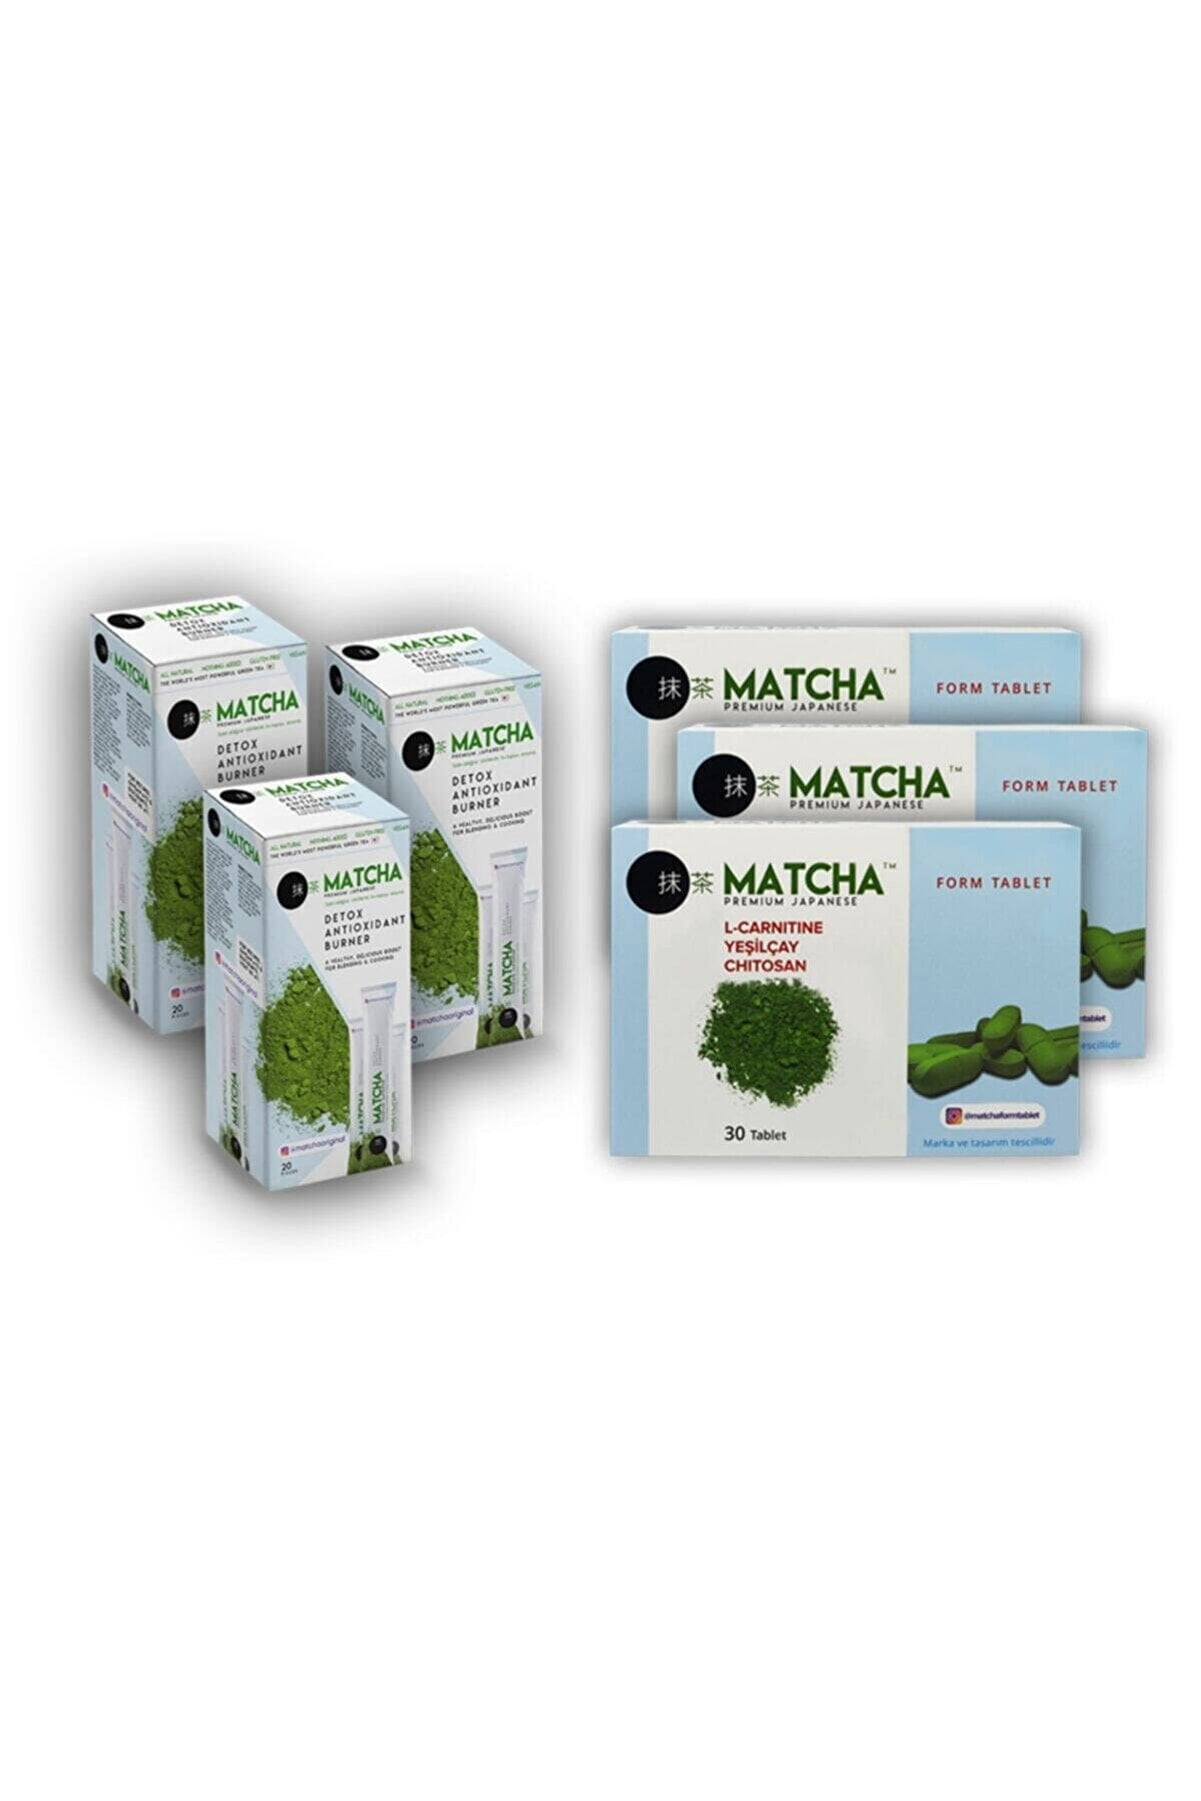 Matcha tea + Matcha Form Tablet x 3 Mix set
